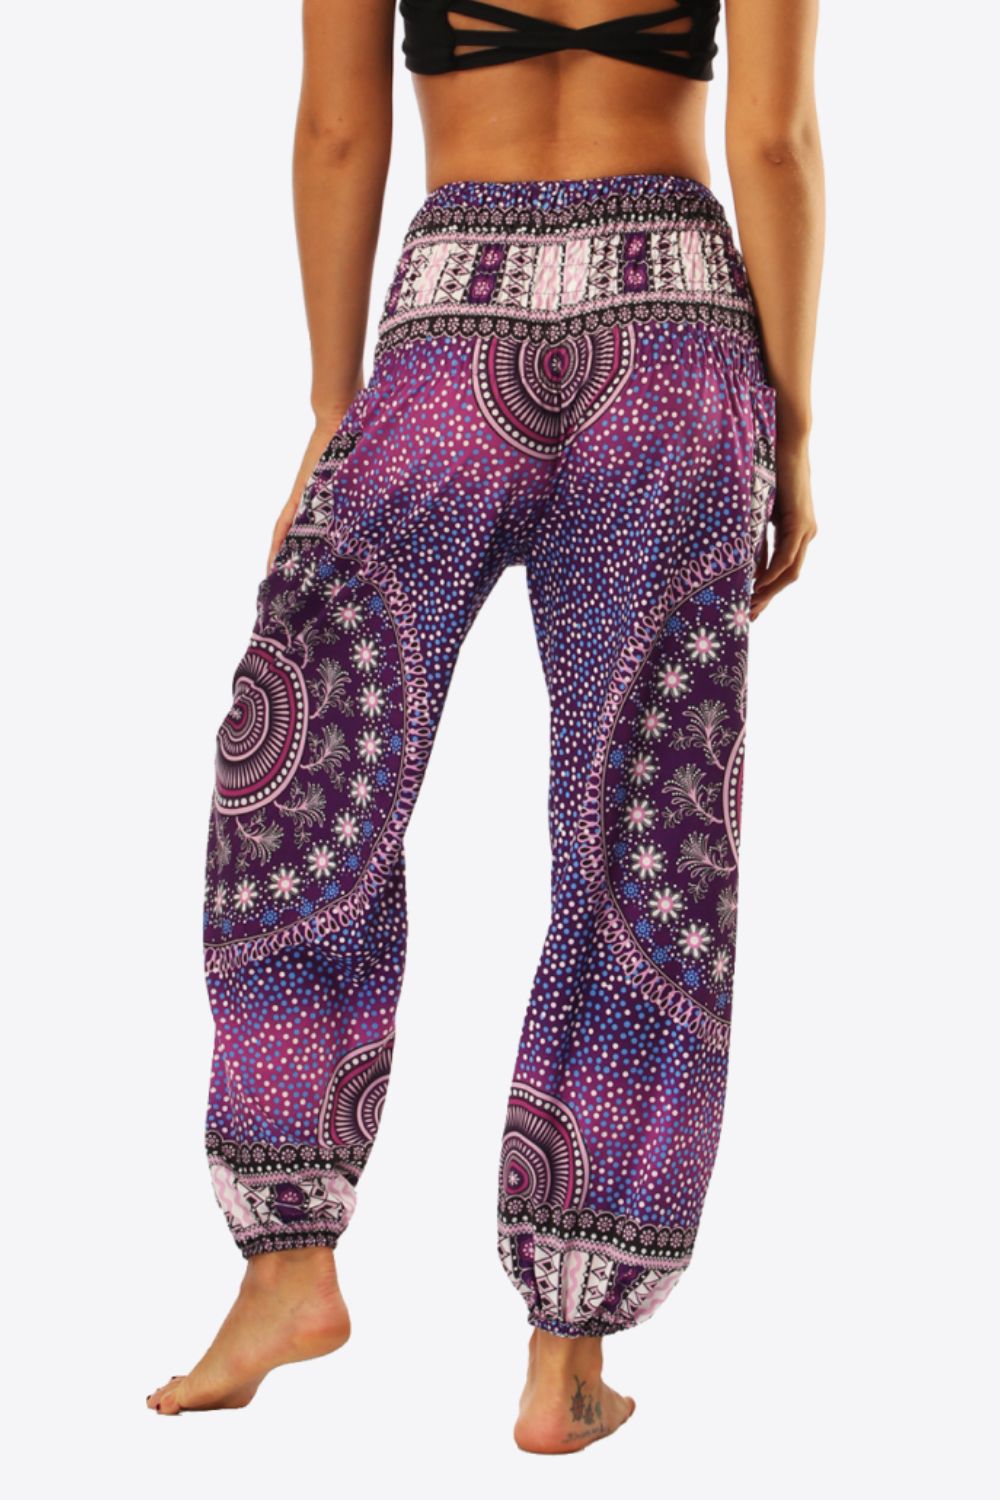 Vibrant purple boho harem pants with intricate patterns.